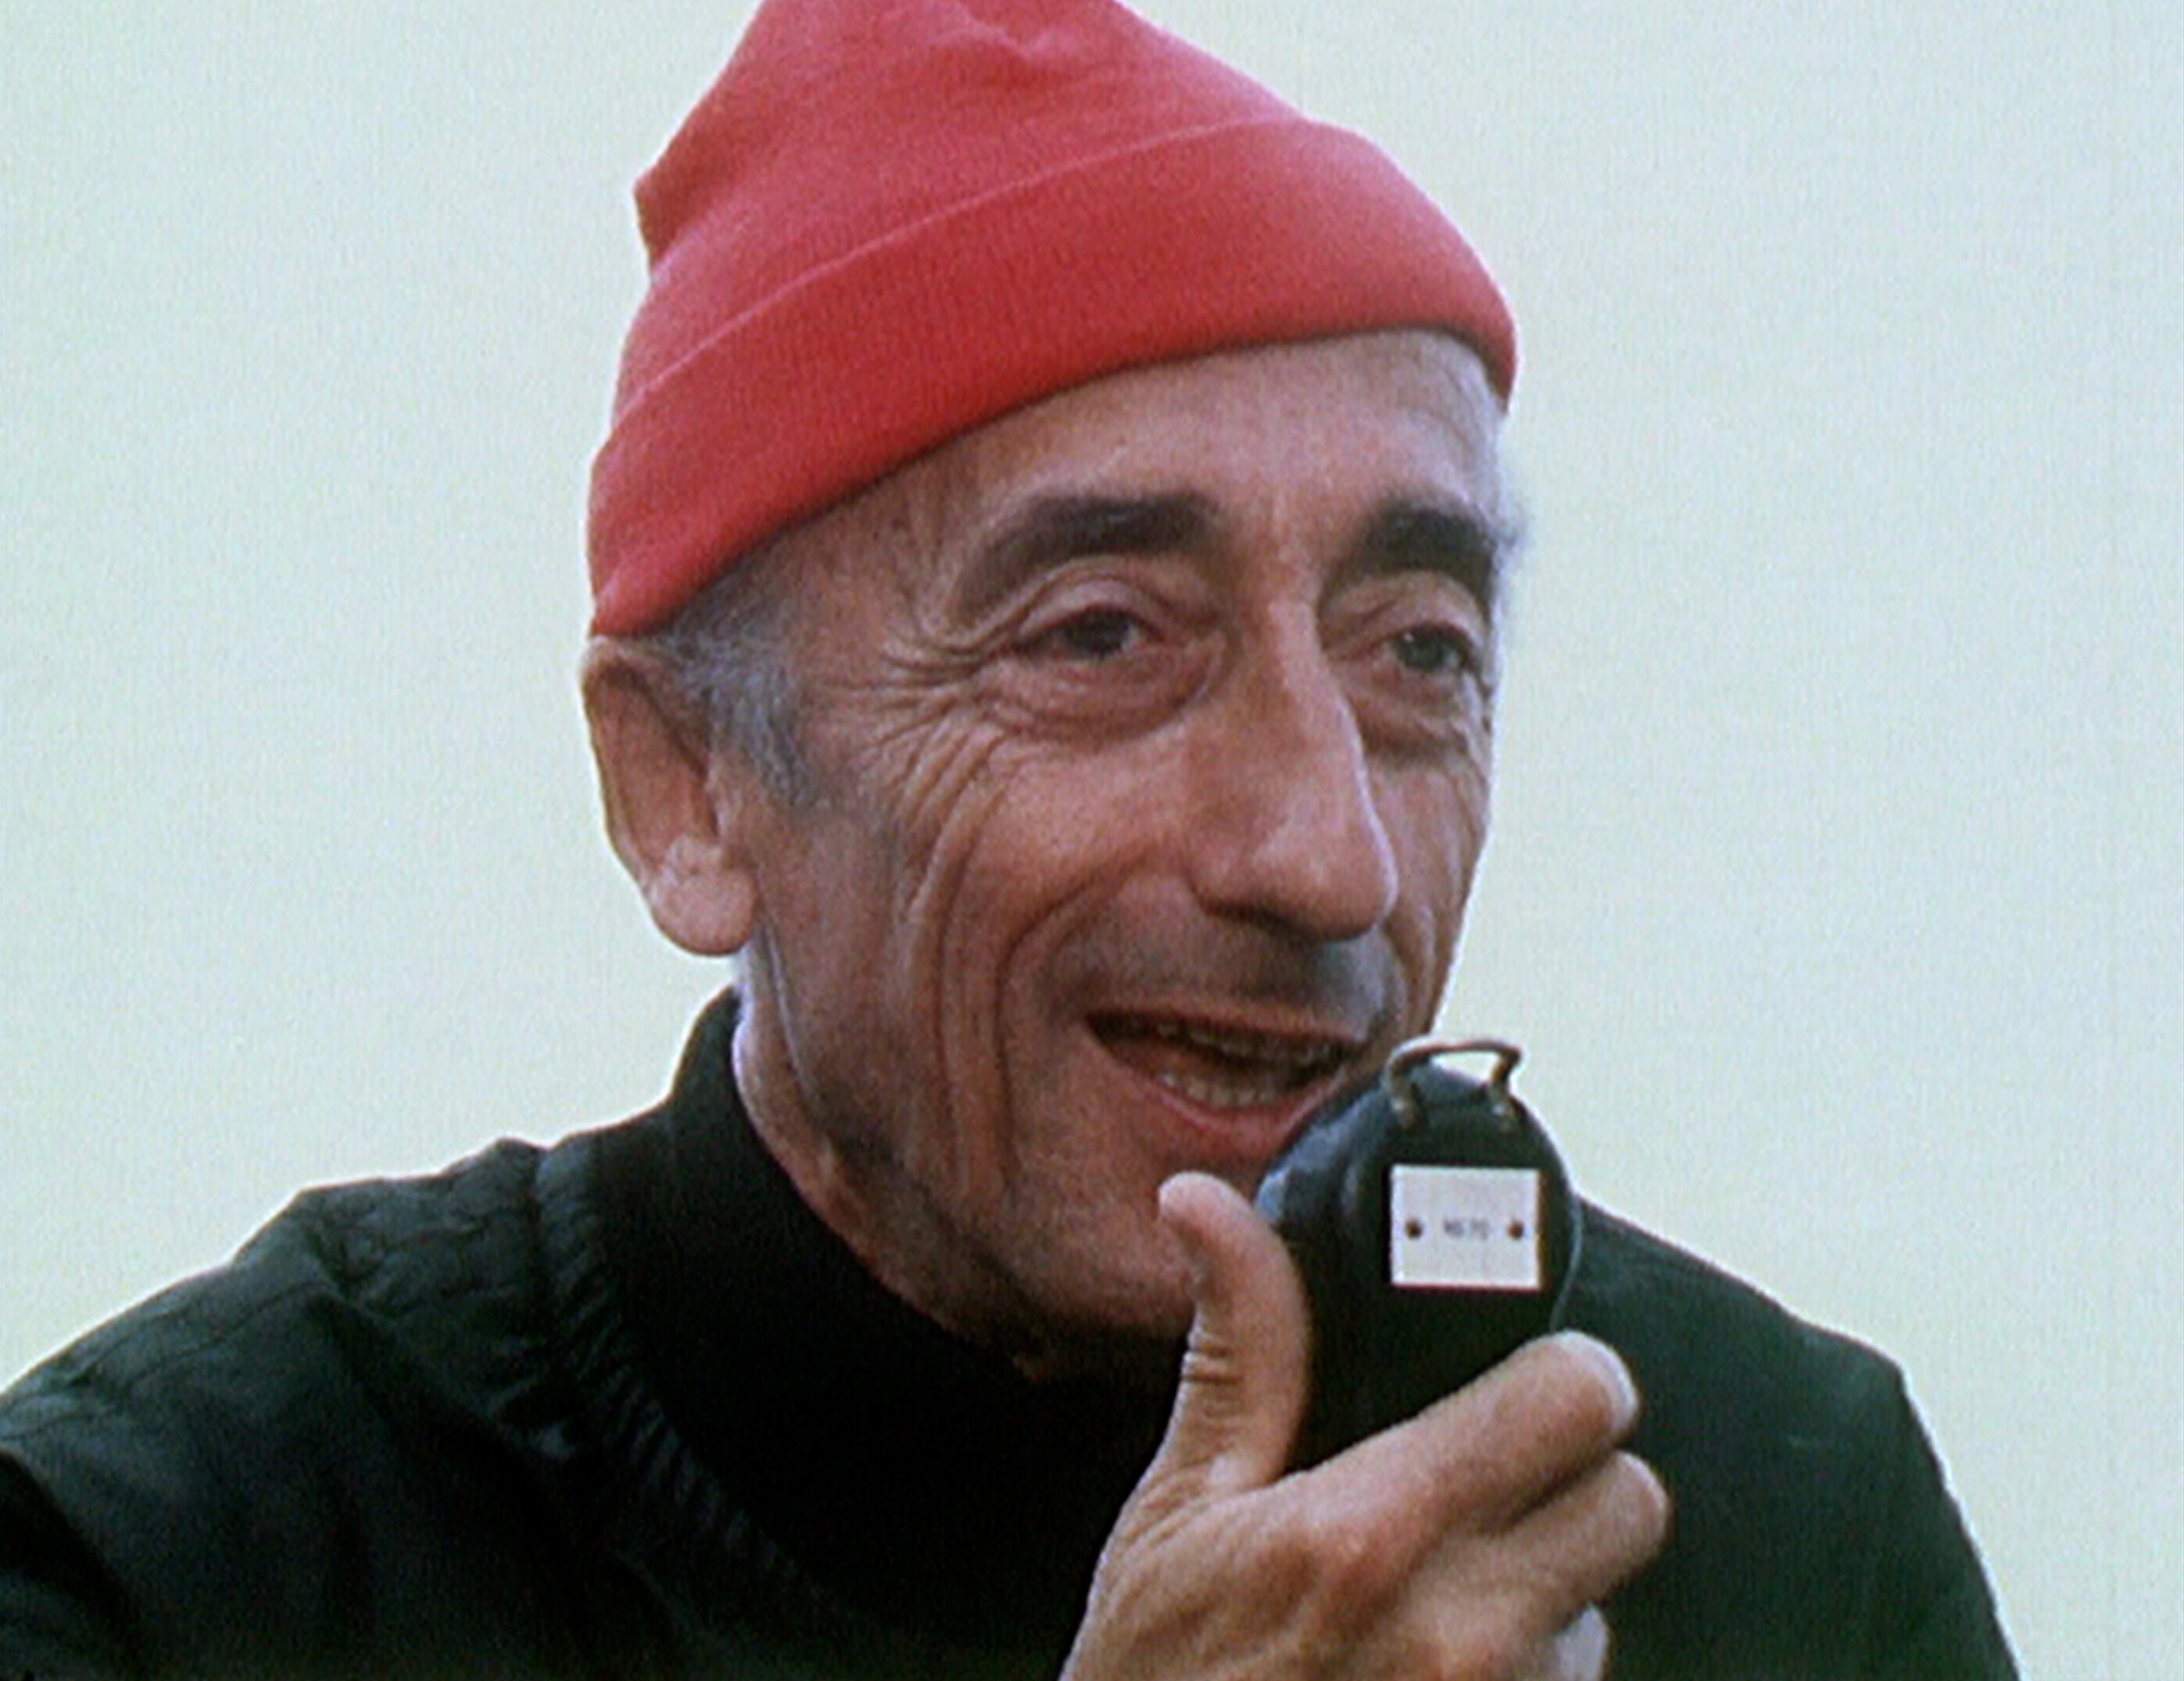 Assista ao trailer de “Becoming Cousteau”, documentário sobre o explorador Jacques Cousteau